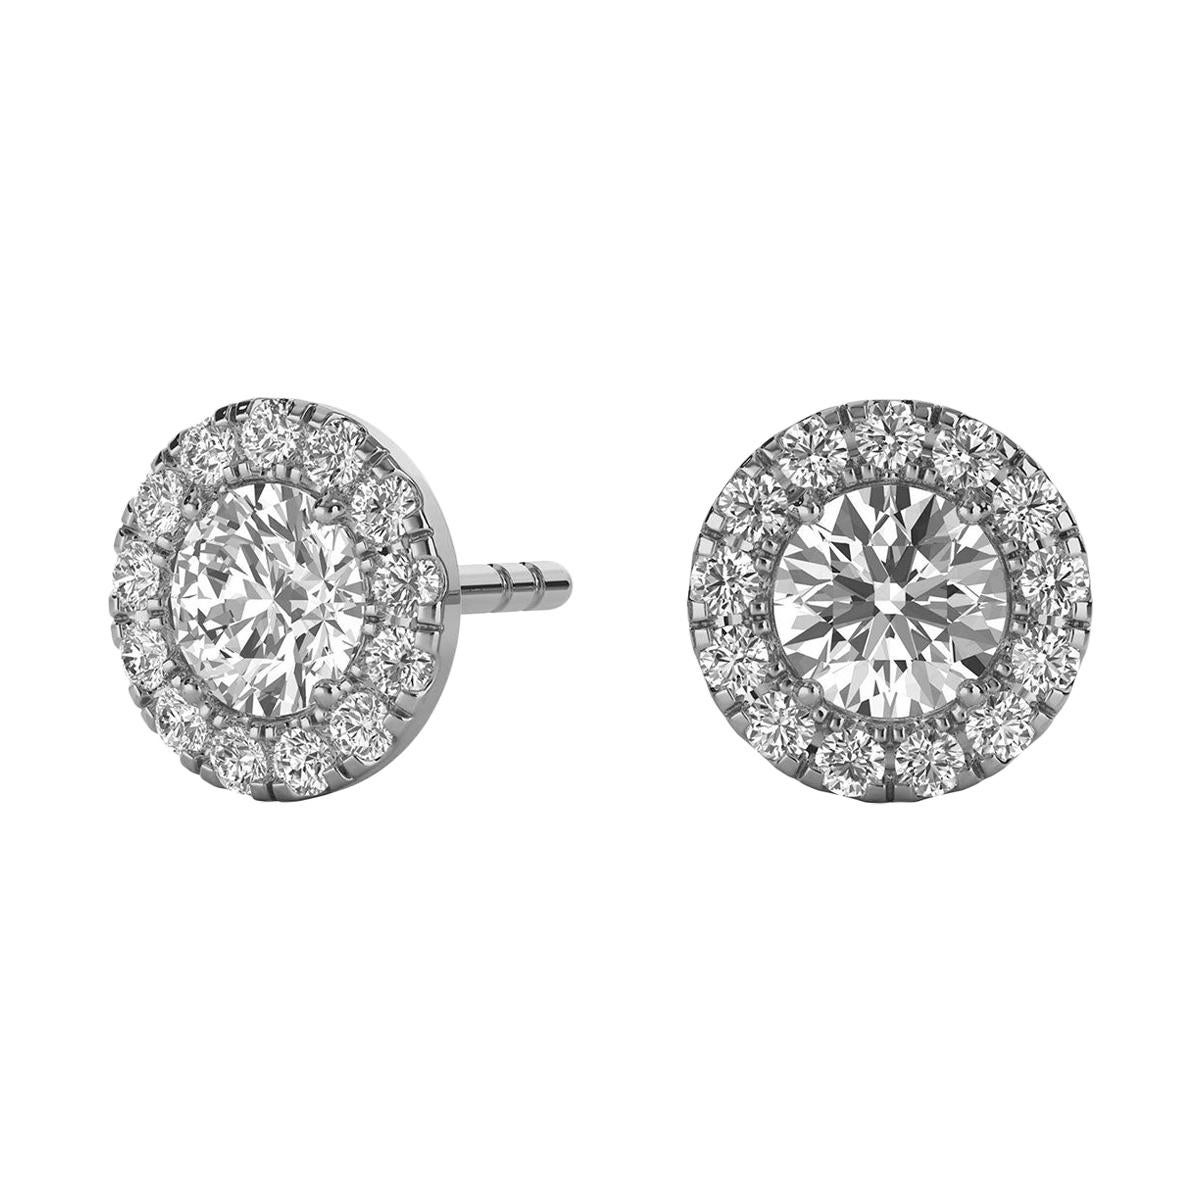 18 Karat White Gold Round Halo Diamond Earrings '3/4 Carat'